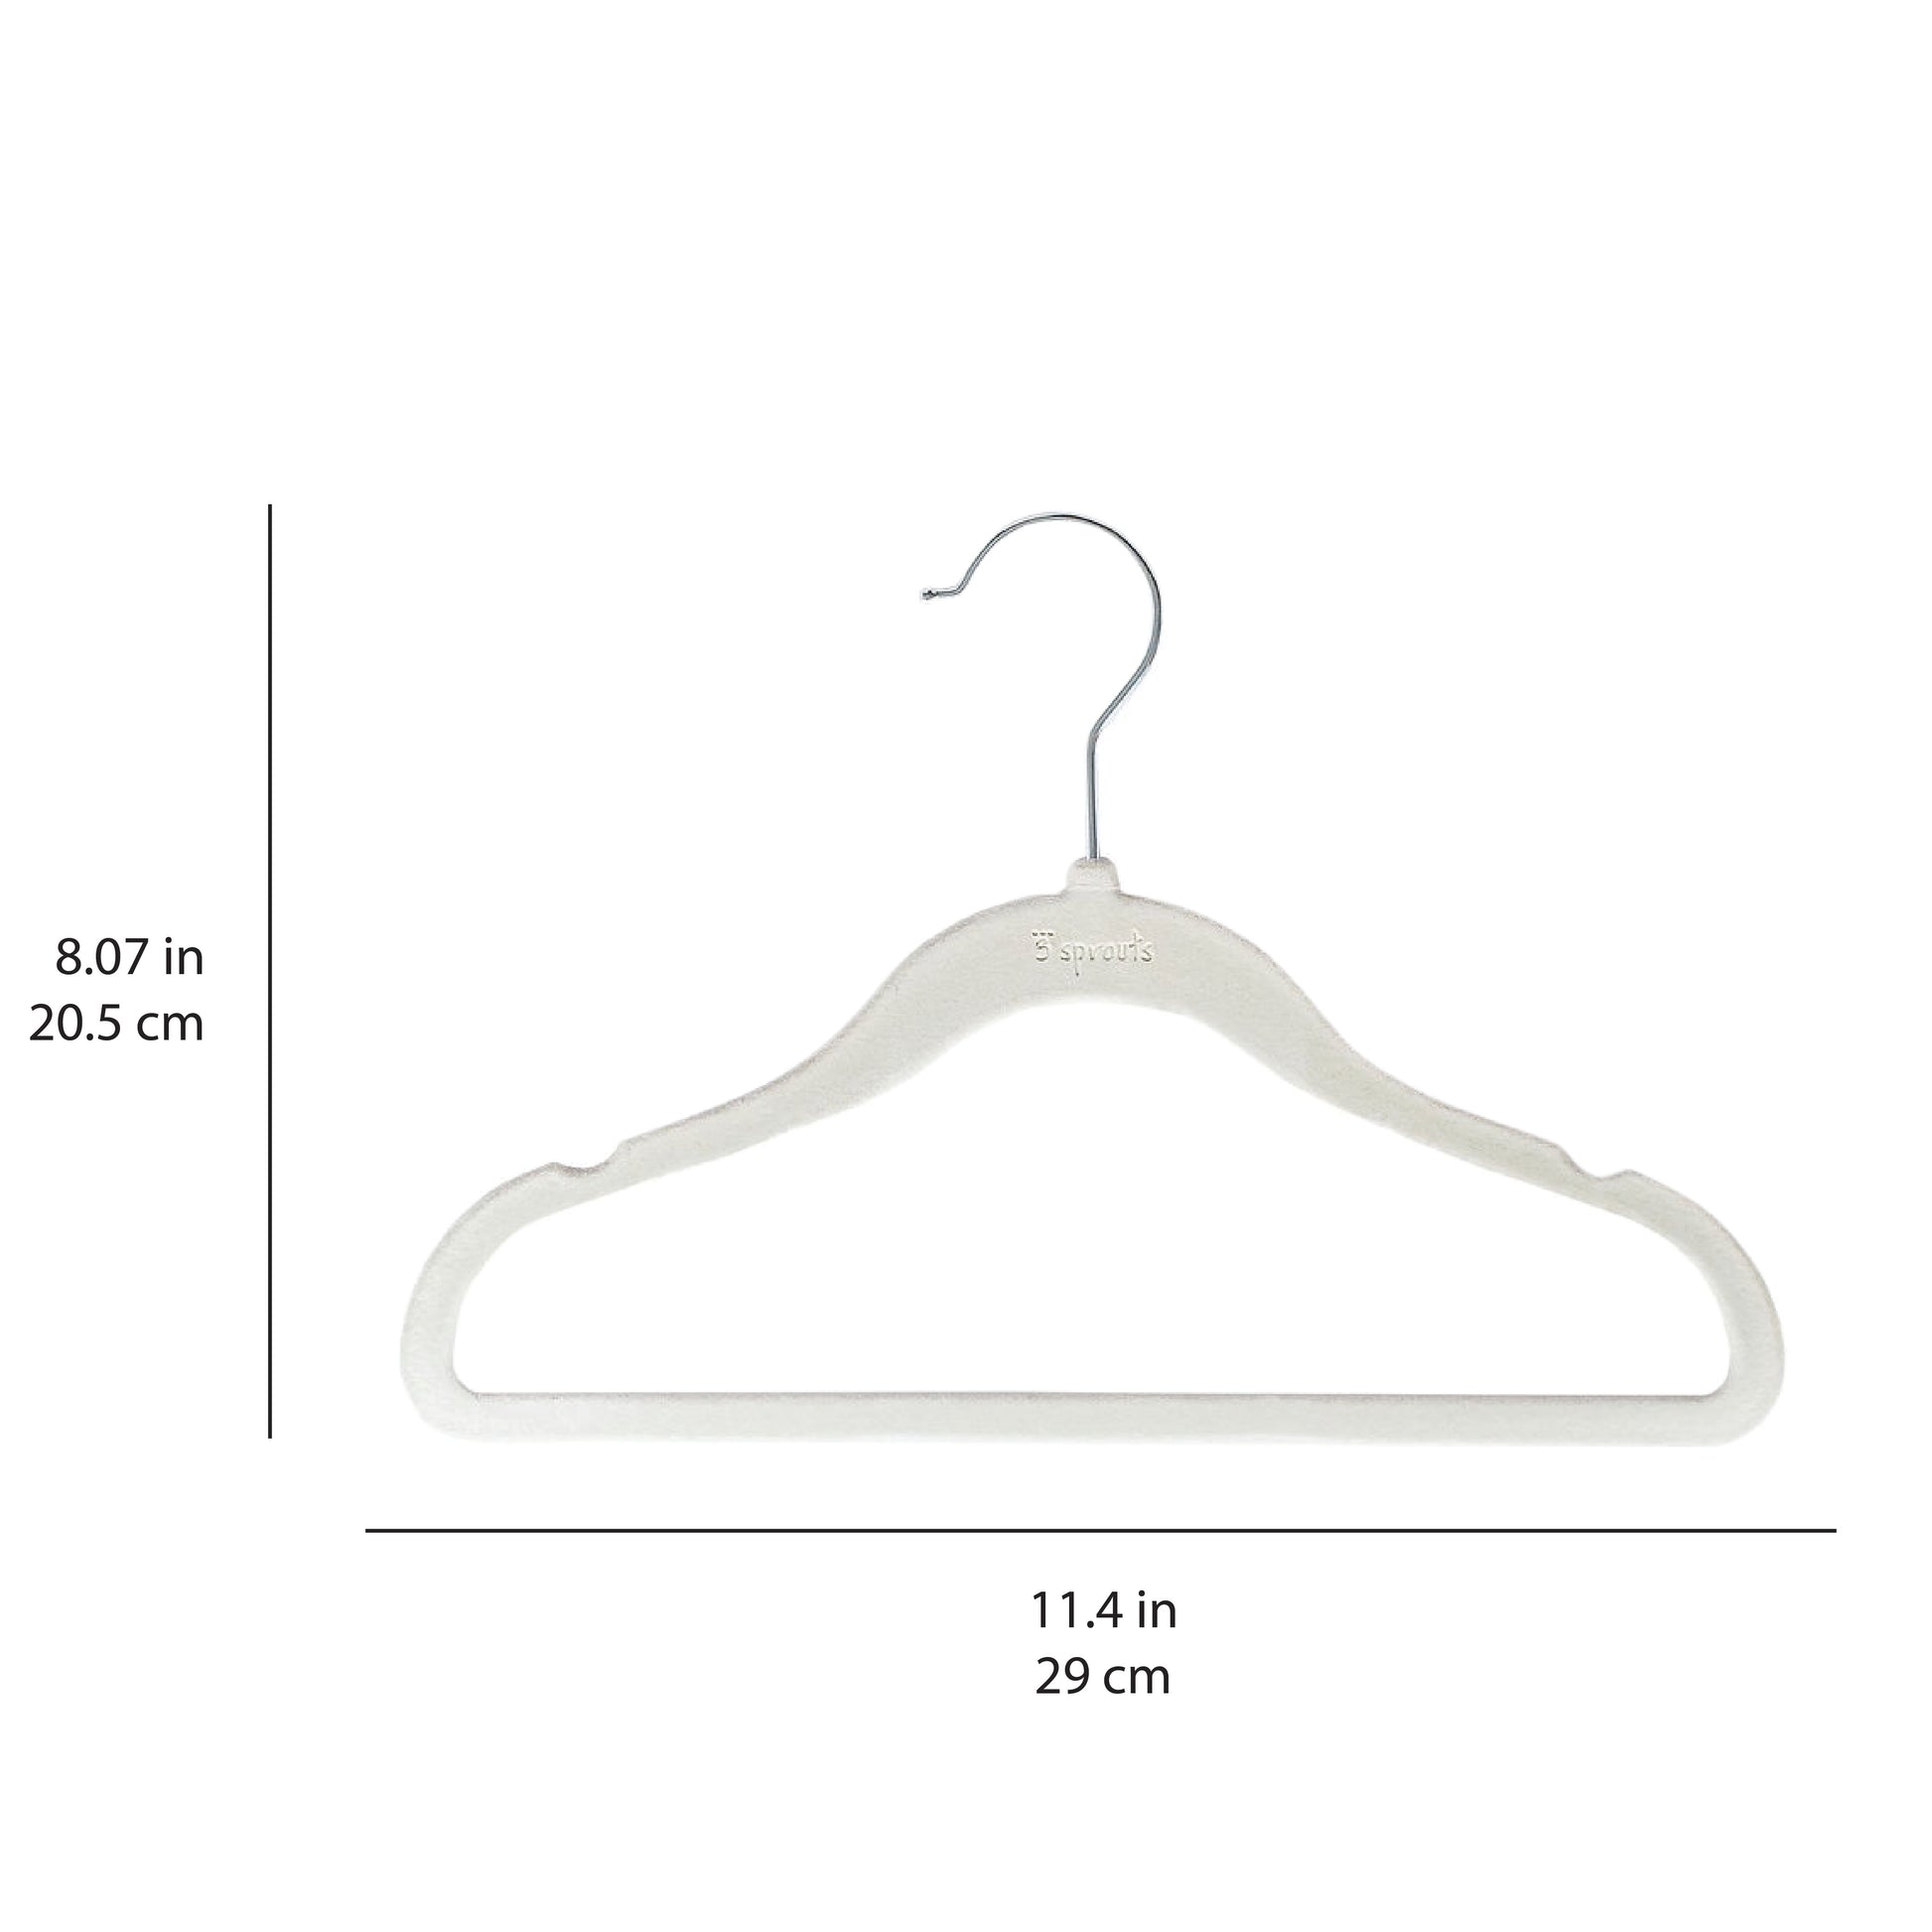 30 Pack, Non-Slip Velvet Hangers Clothes Flocked Suit Hangers, Beige